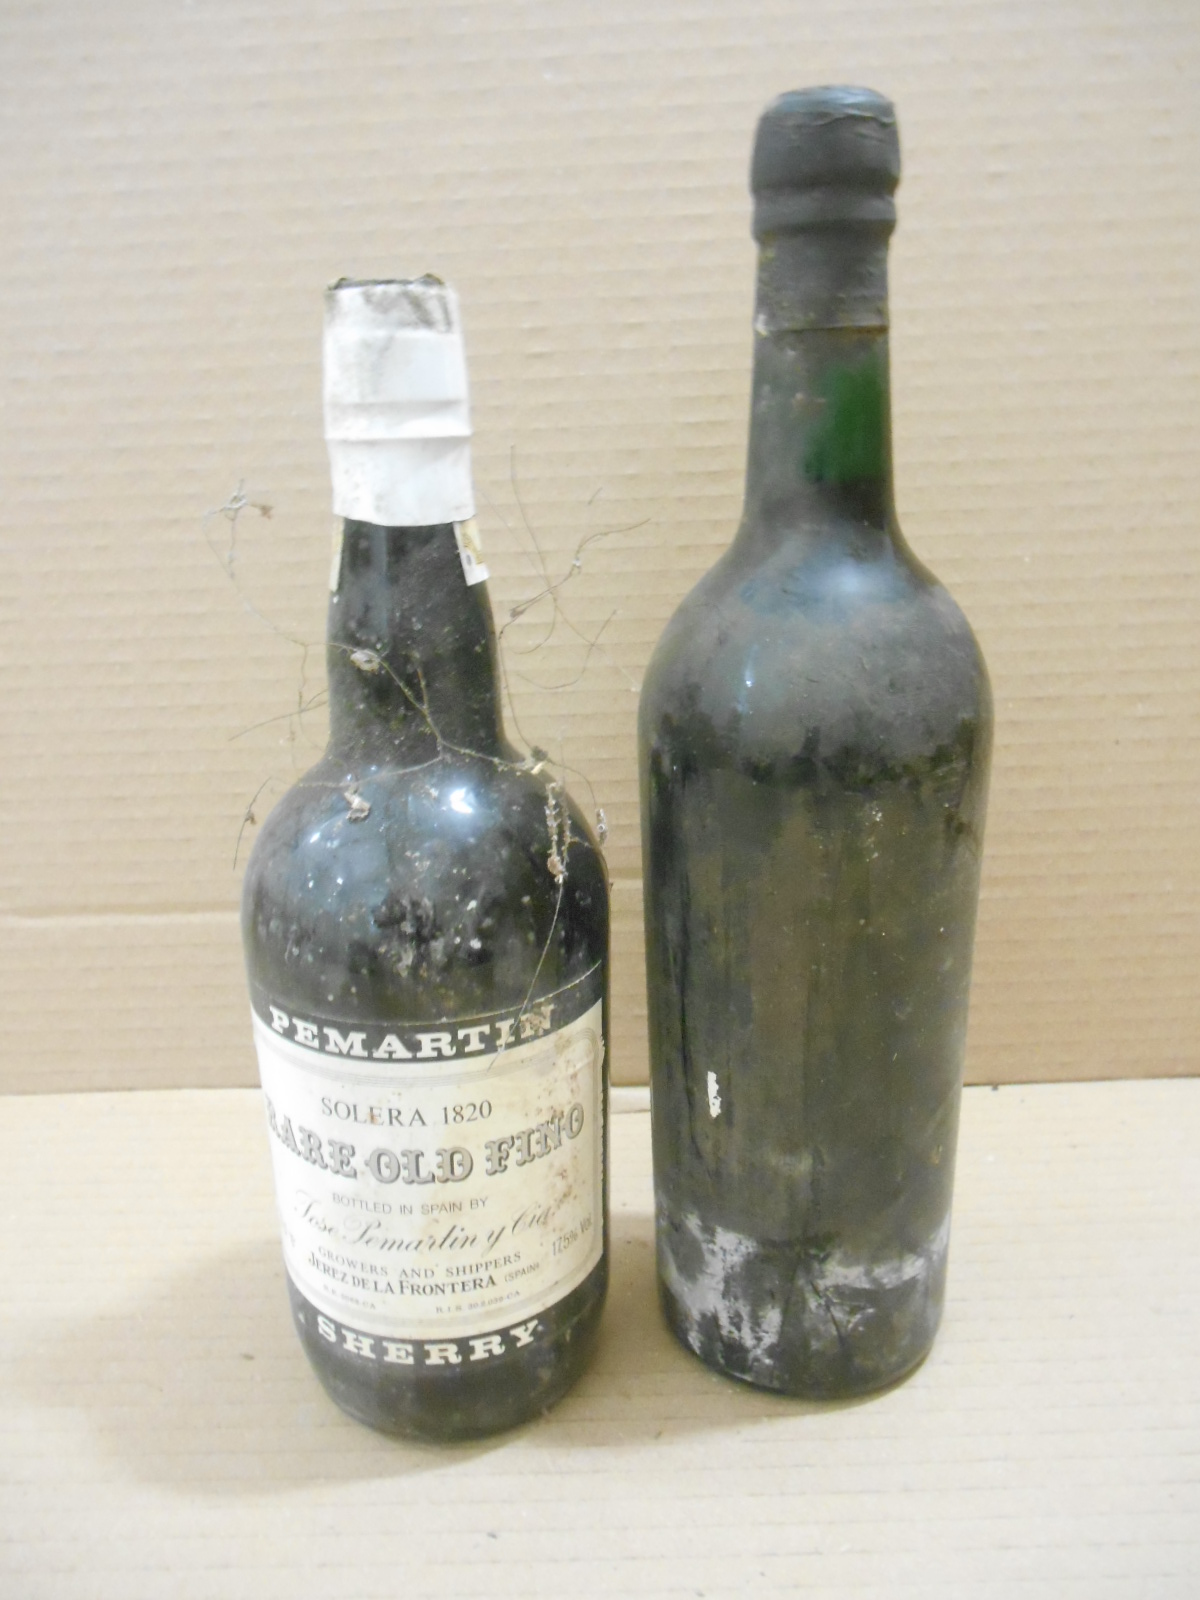 Warre's Vintage Port 1966, one bottle (in neck); Pemartin Rare Old Fino Sherry, Solera 1820, three